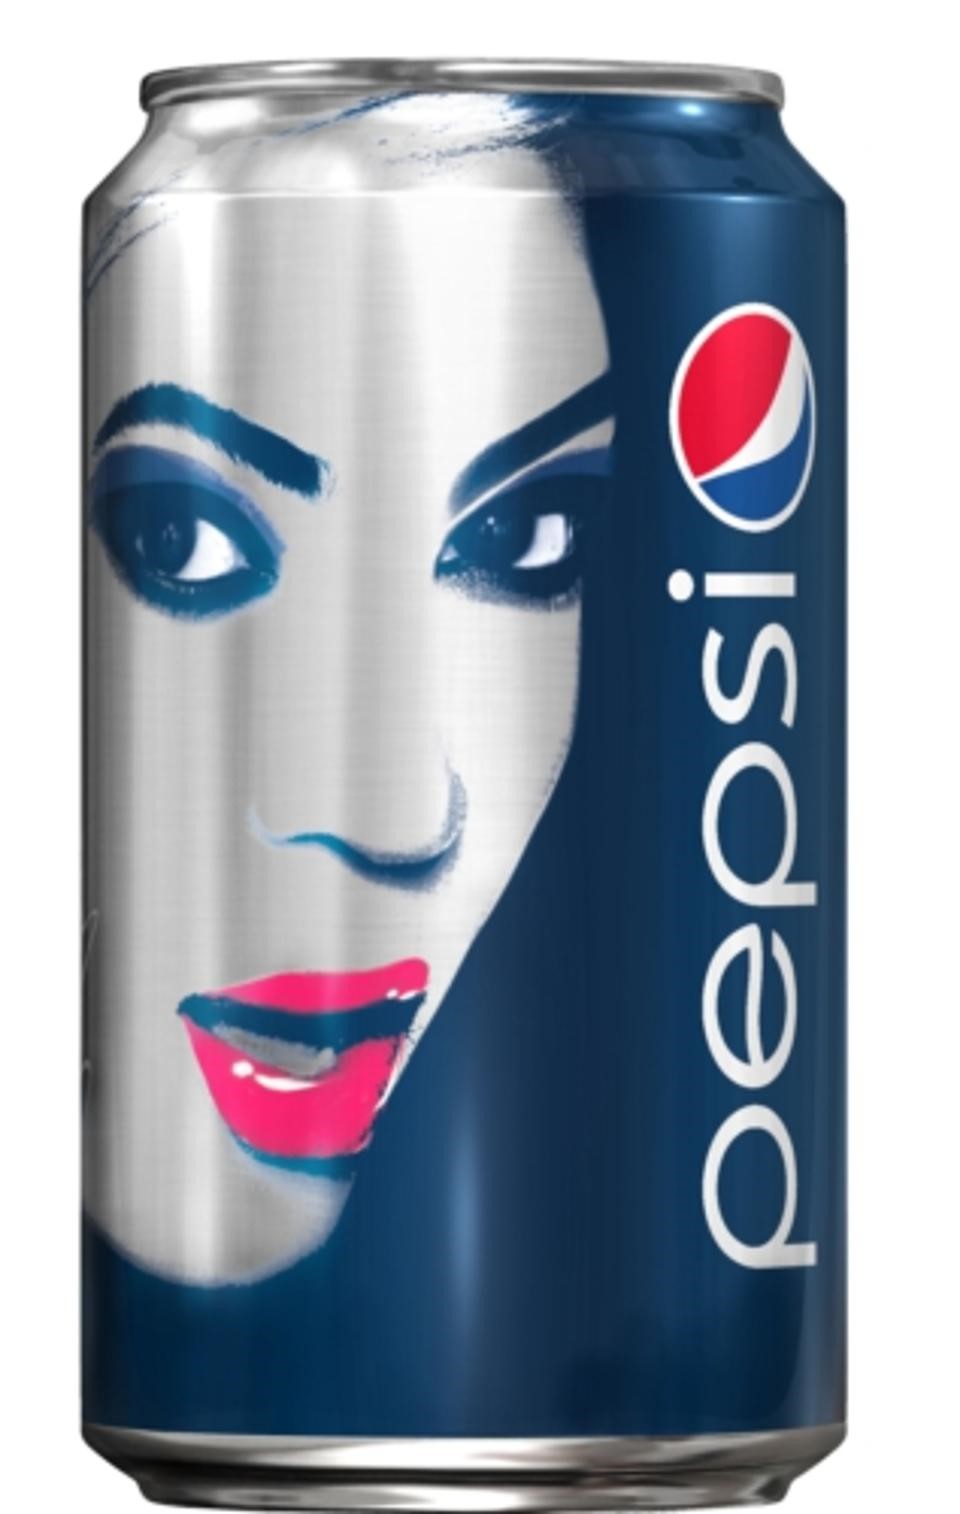 Beyoncé as the “face” of Pepsi 